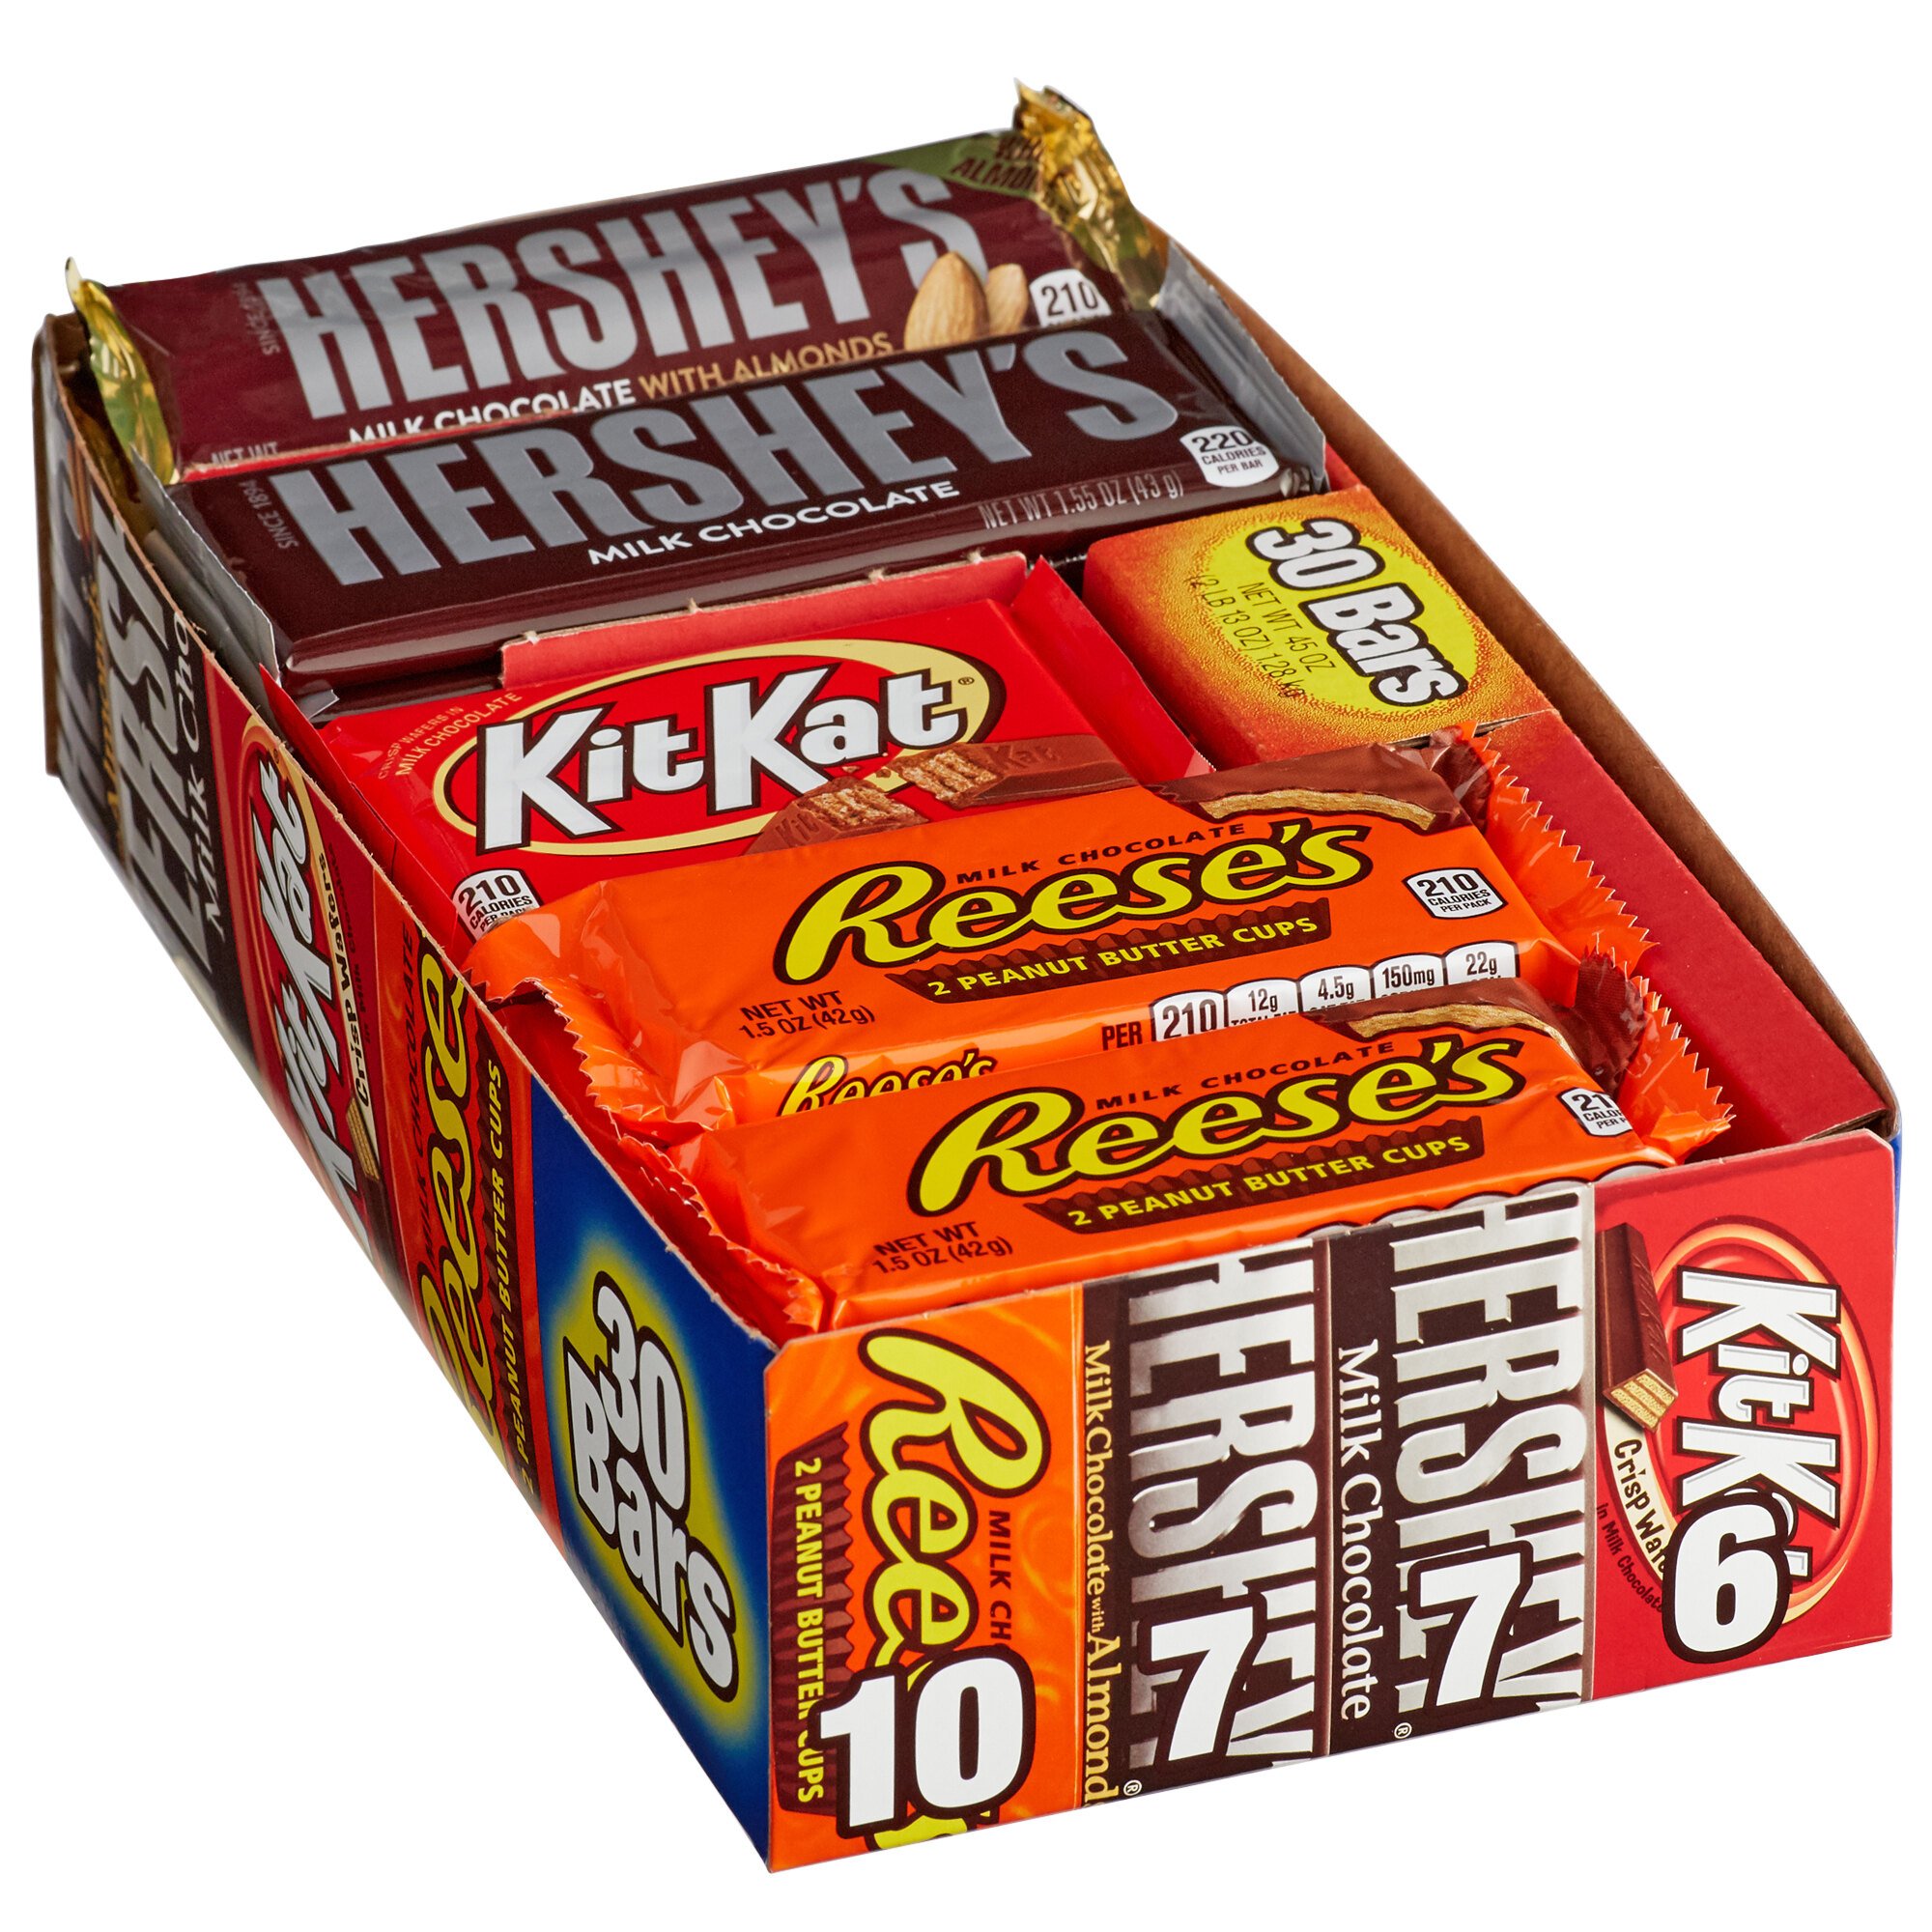 Hershey Chocolate Candy Bars